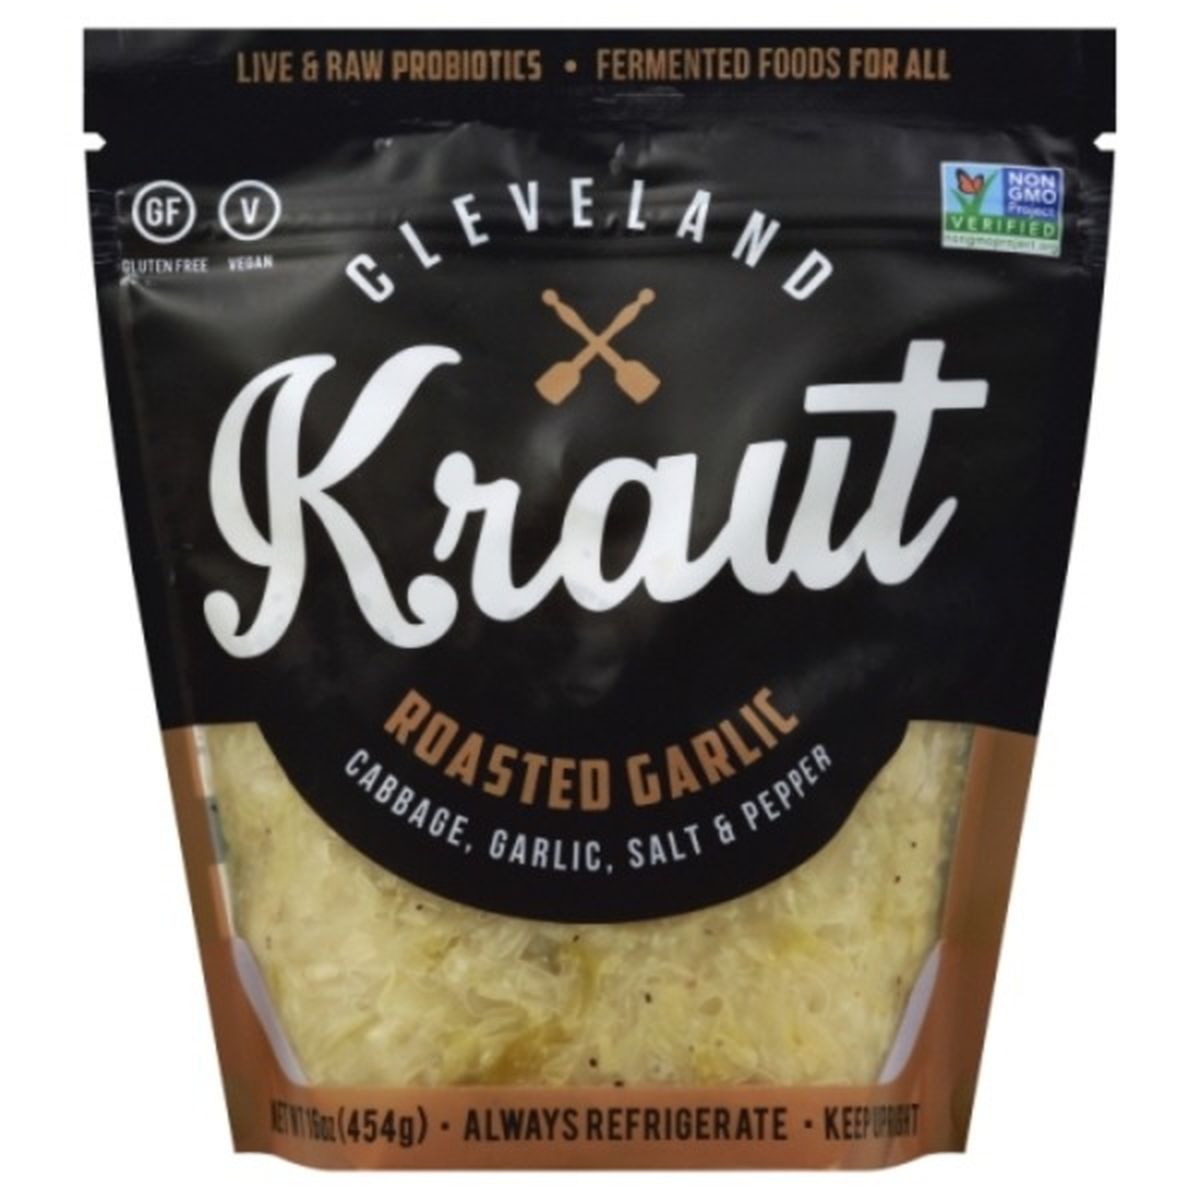 Calories in Cleveland Kraut Kraut, Roasted Garlic